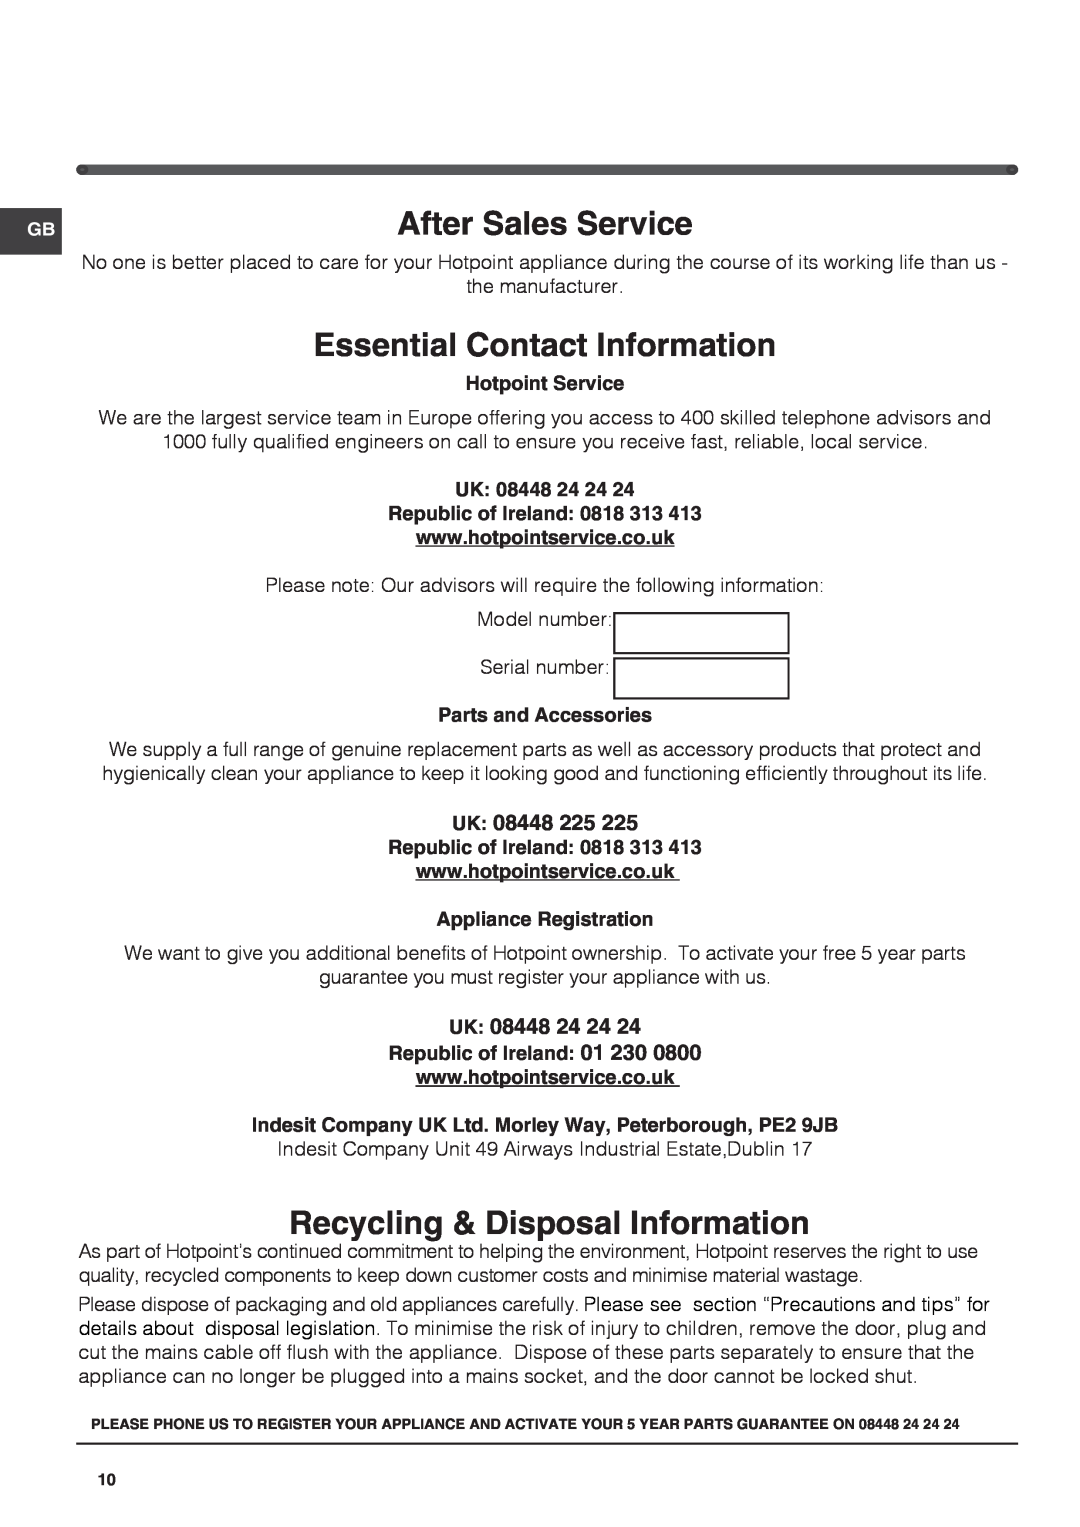 Hotpoint KSZ1422.1, HZ1422.1 manual After Sales Service, Recycling & Disposal Information, UK 08448 225, UK 08448 24 24 